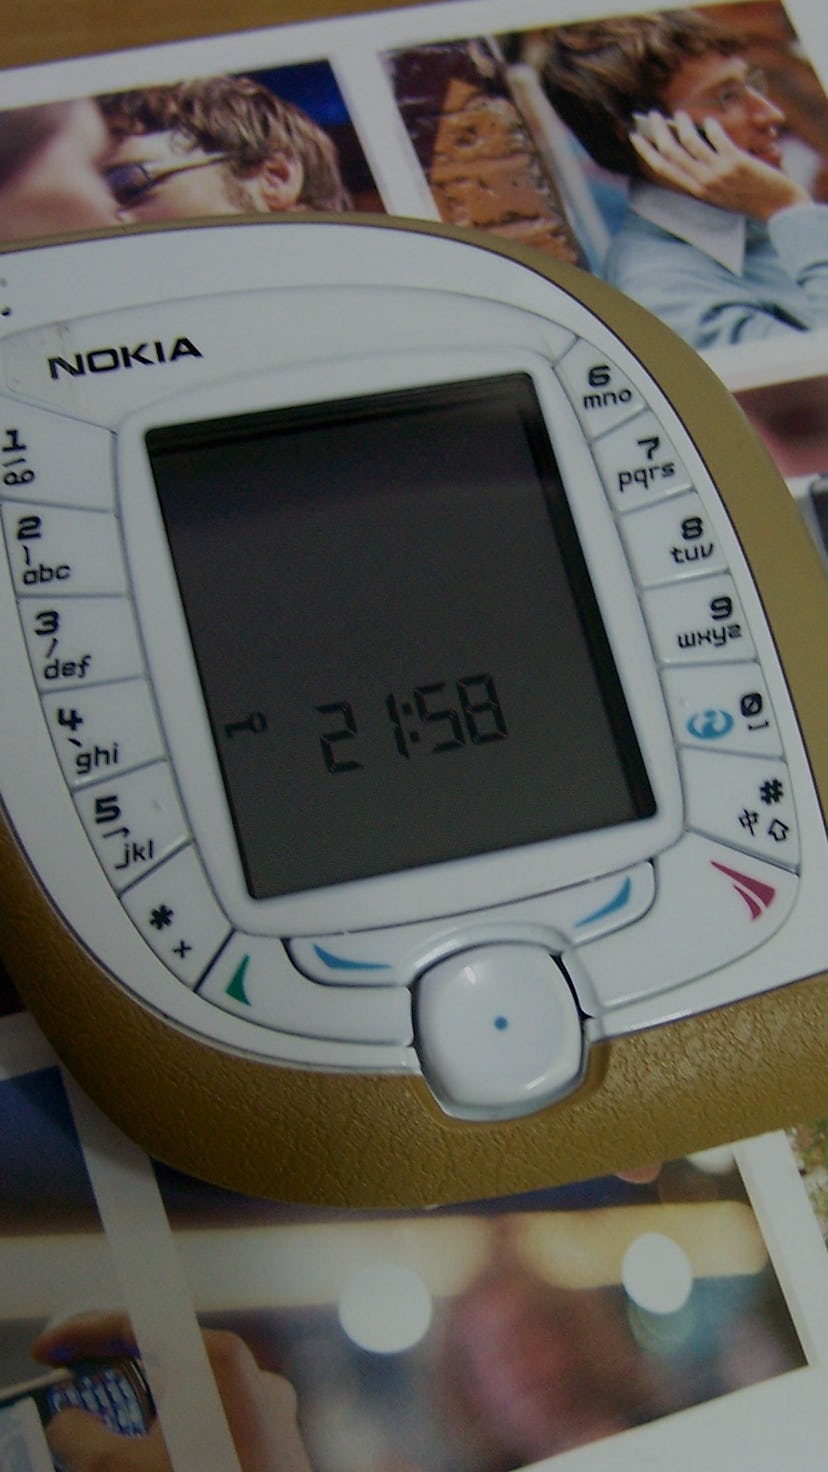 Nokia 7600 phone